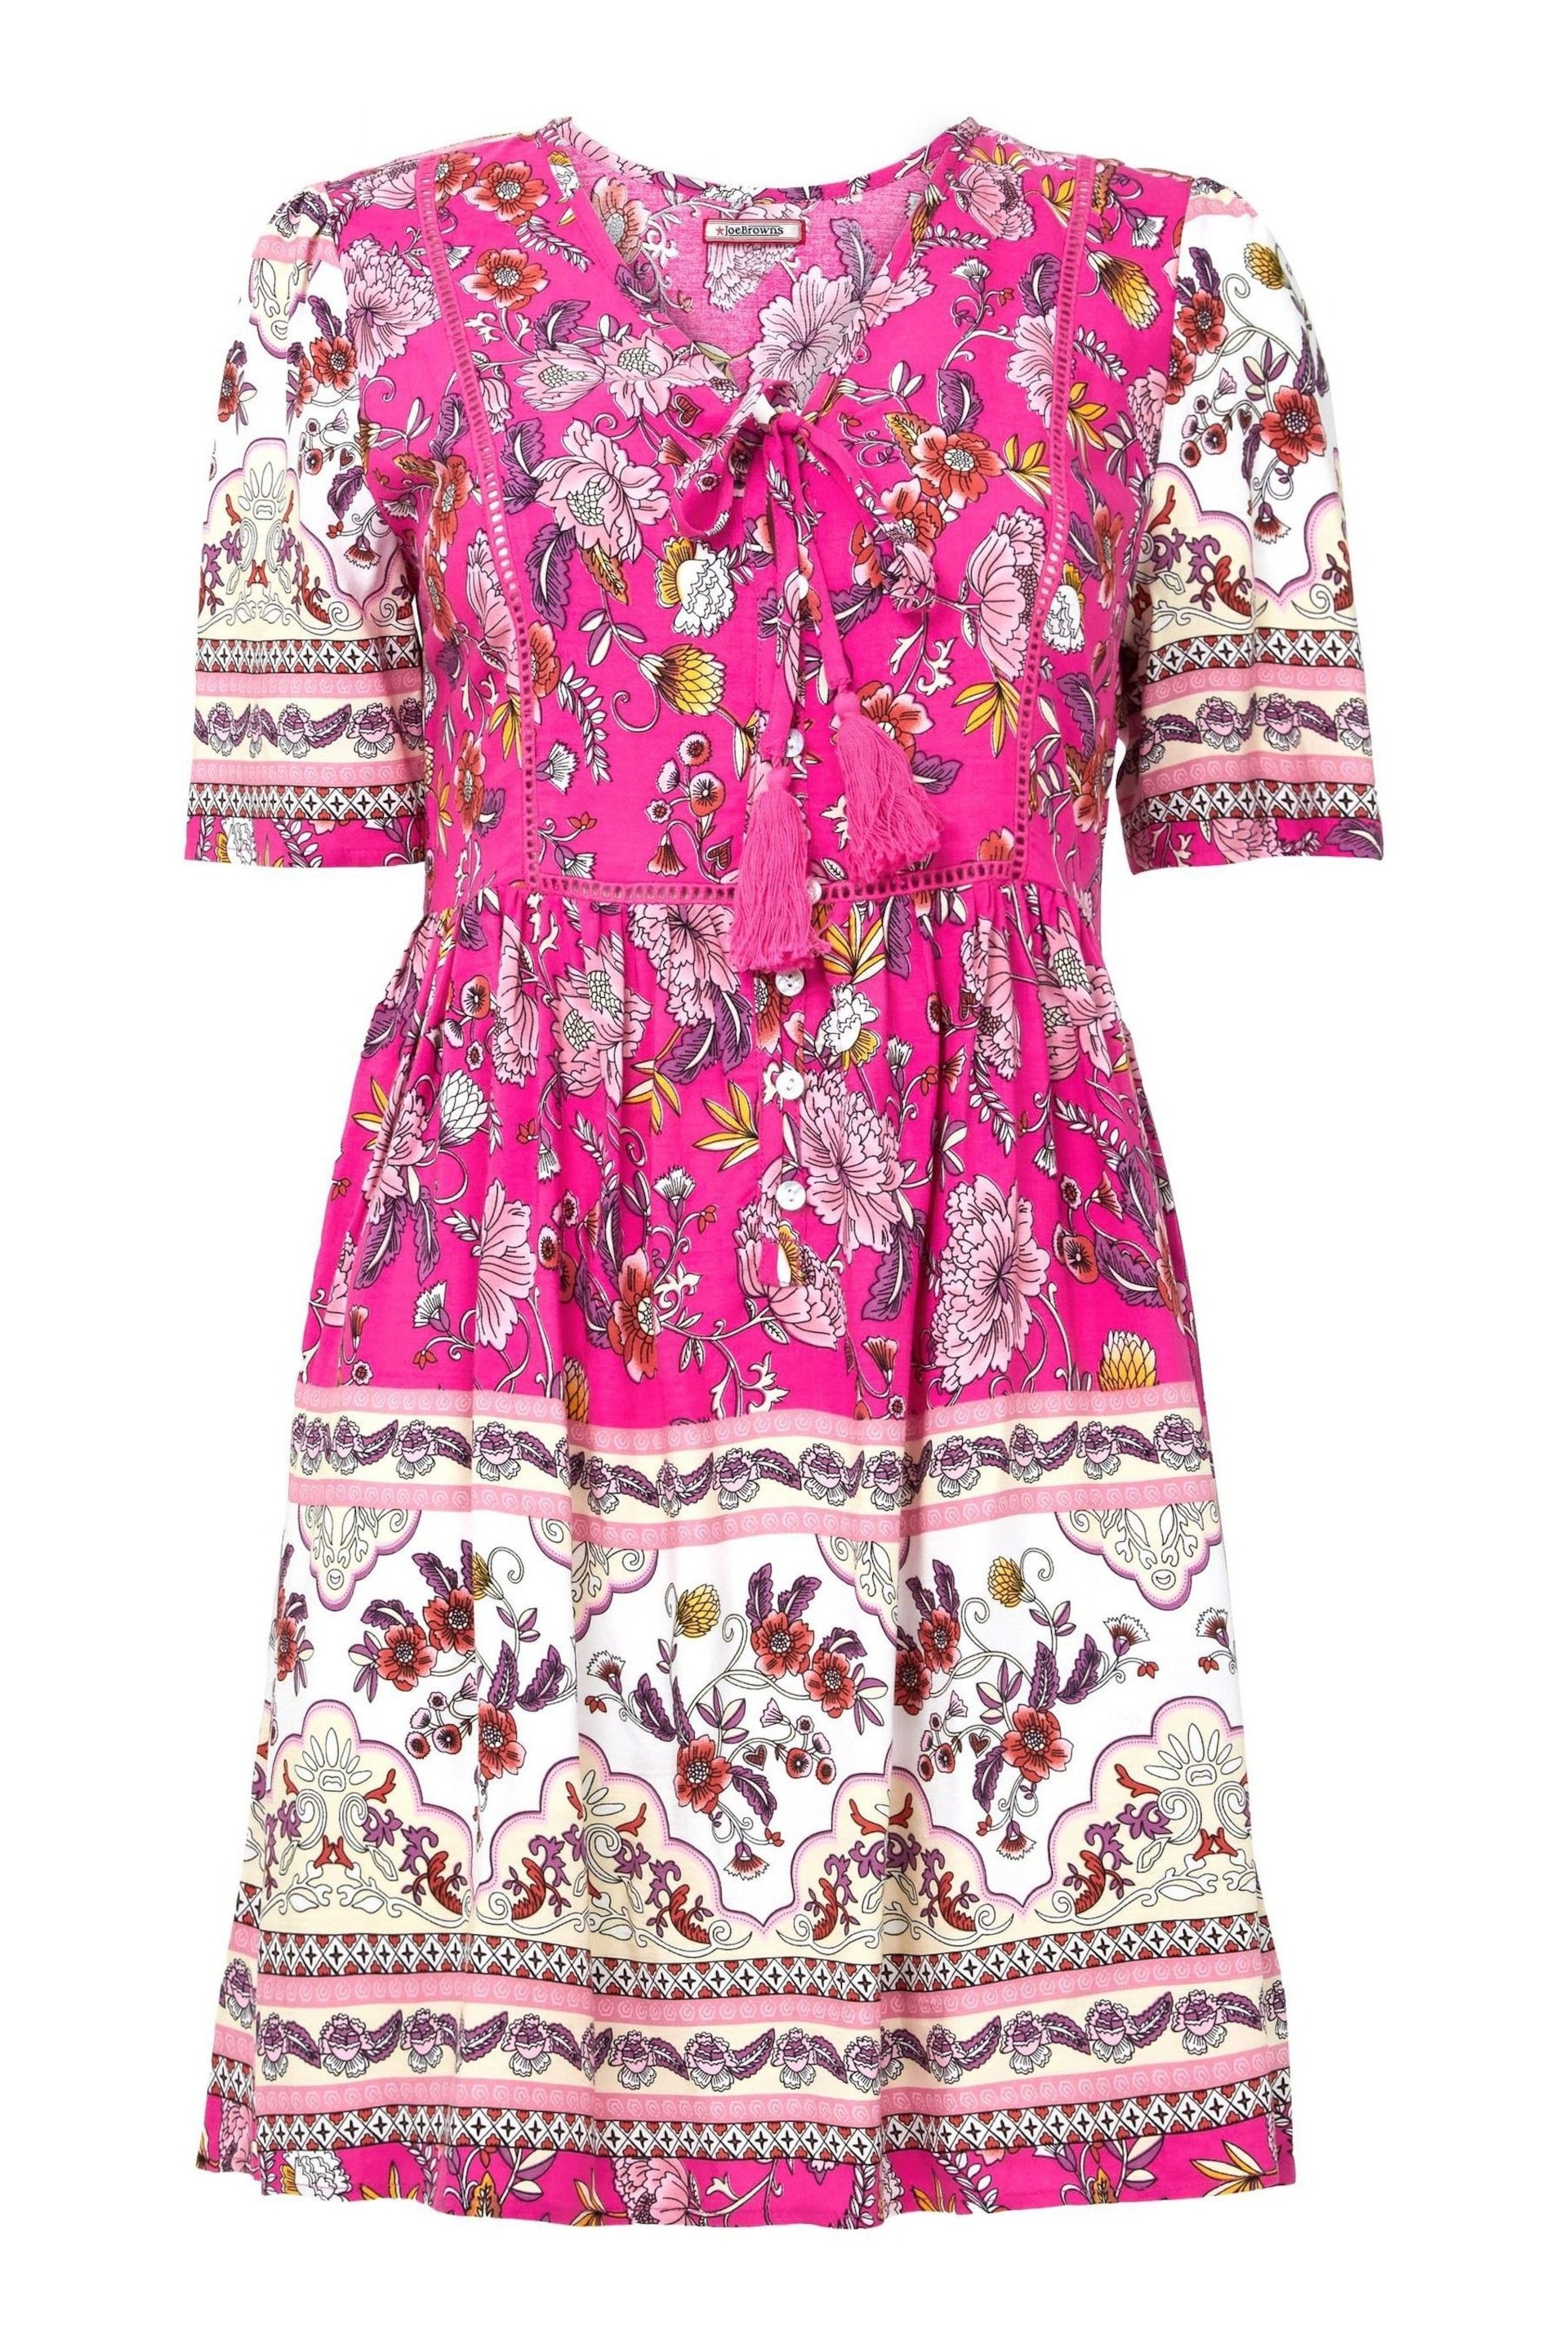 Joe Browns Pink Sleeveless Floral Print Tunic - Image 3 of 3